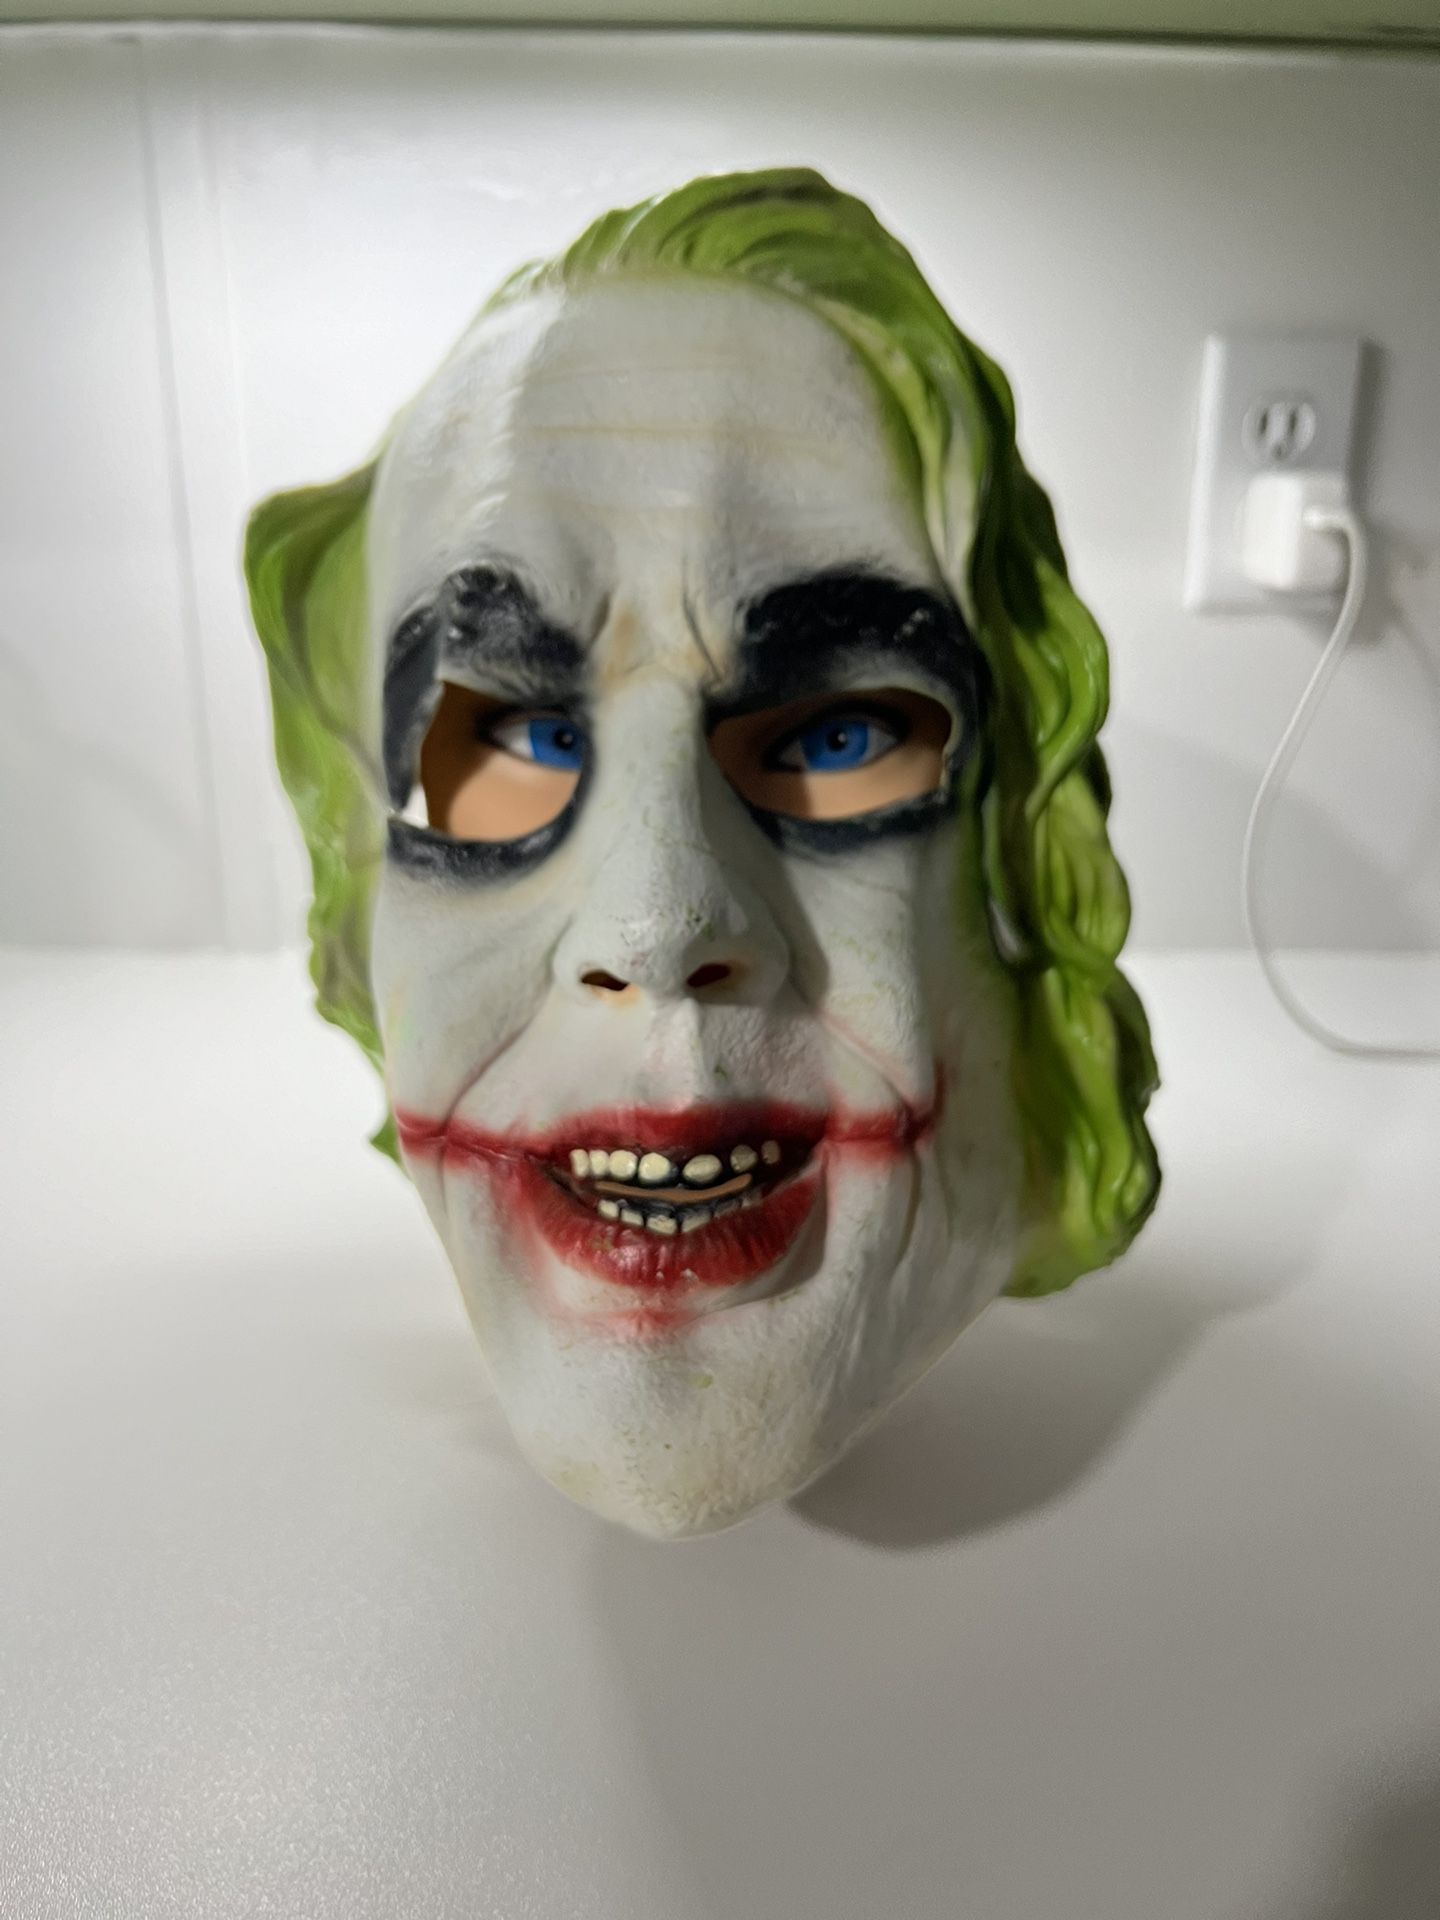 Joker Mask Batman Adult Halloween Costume Clown Latex Comics Cosplay